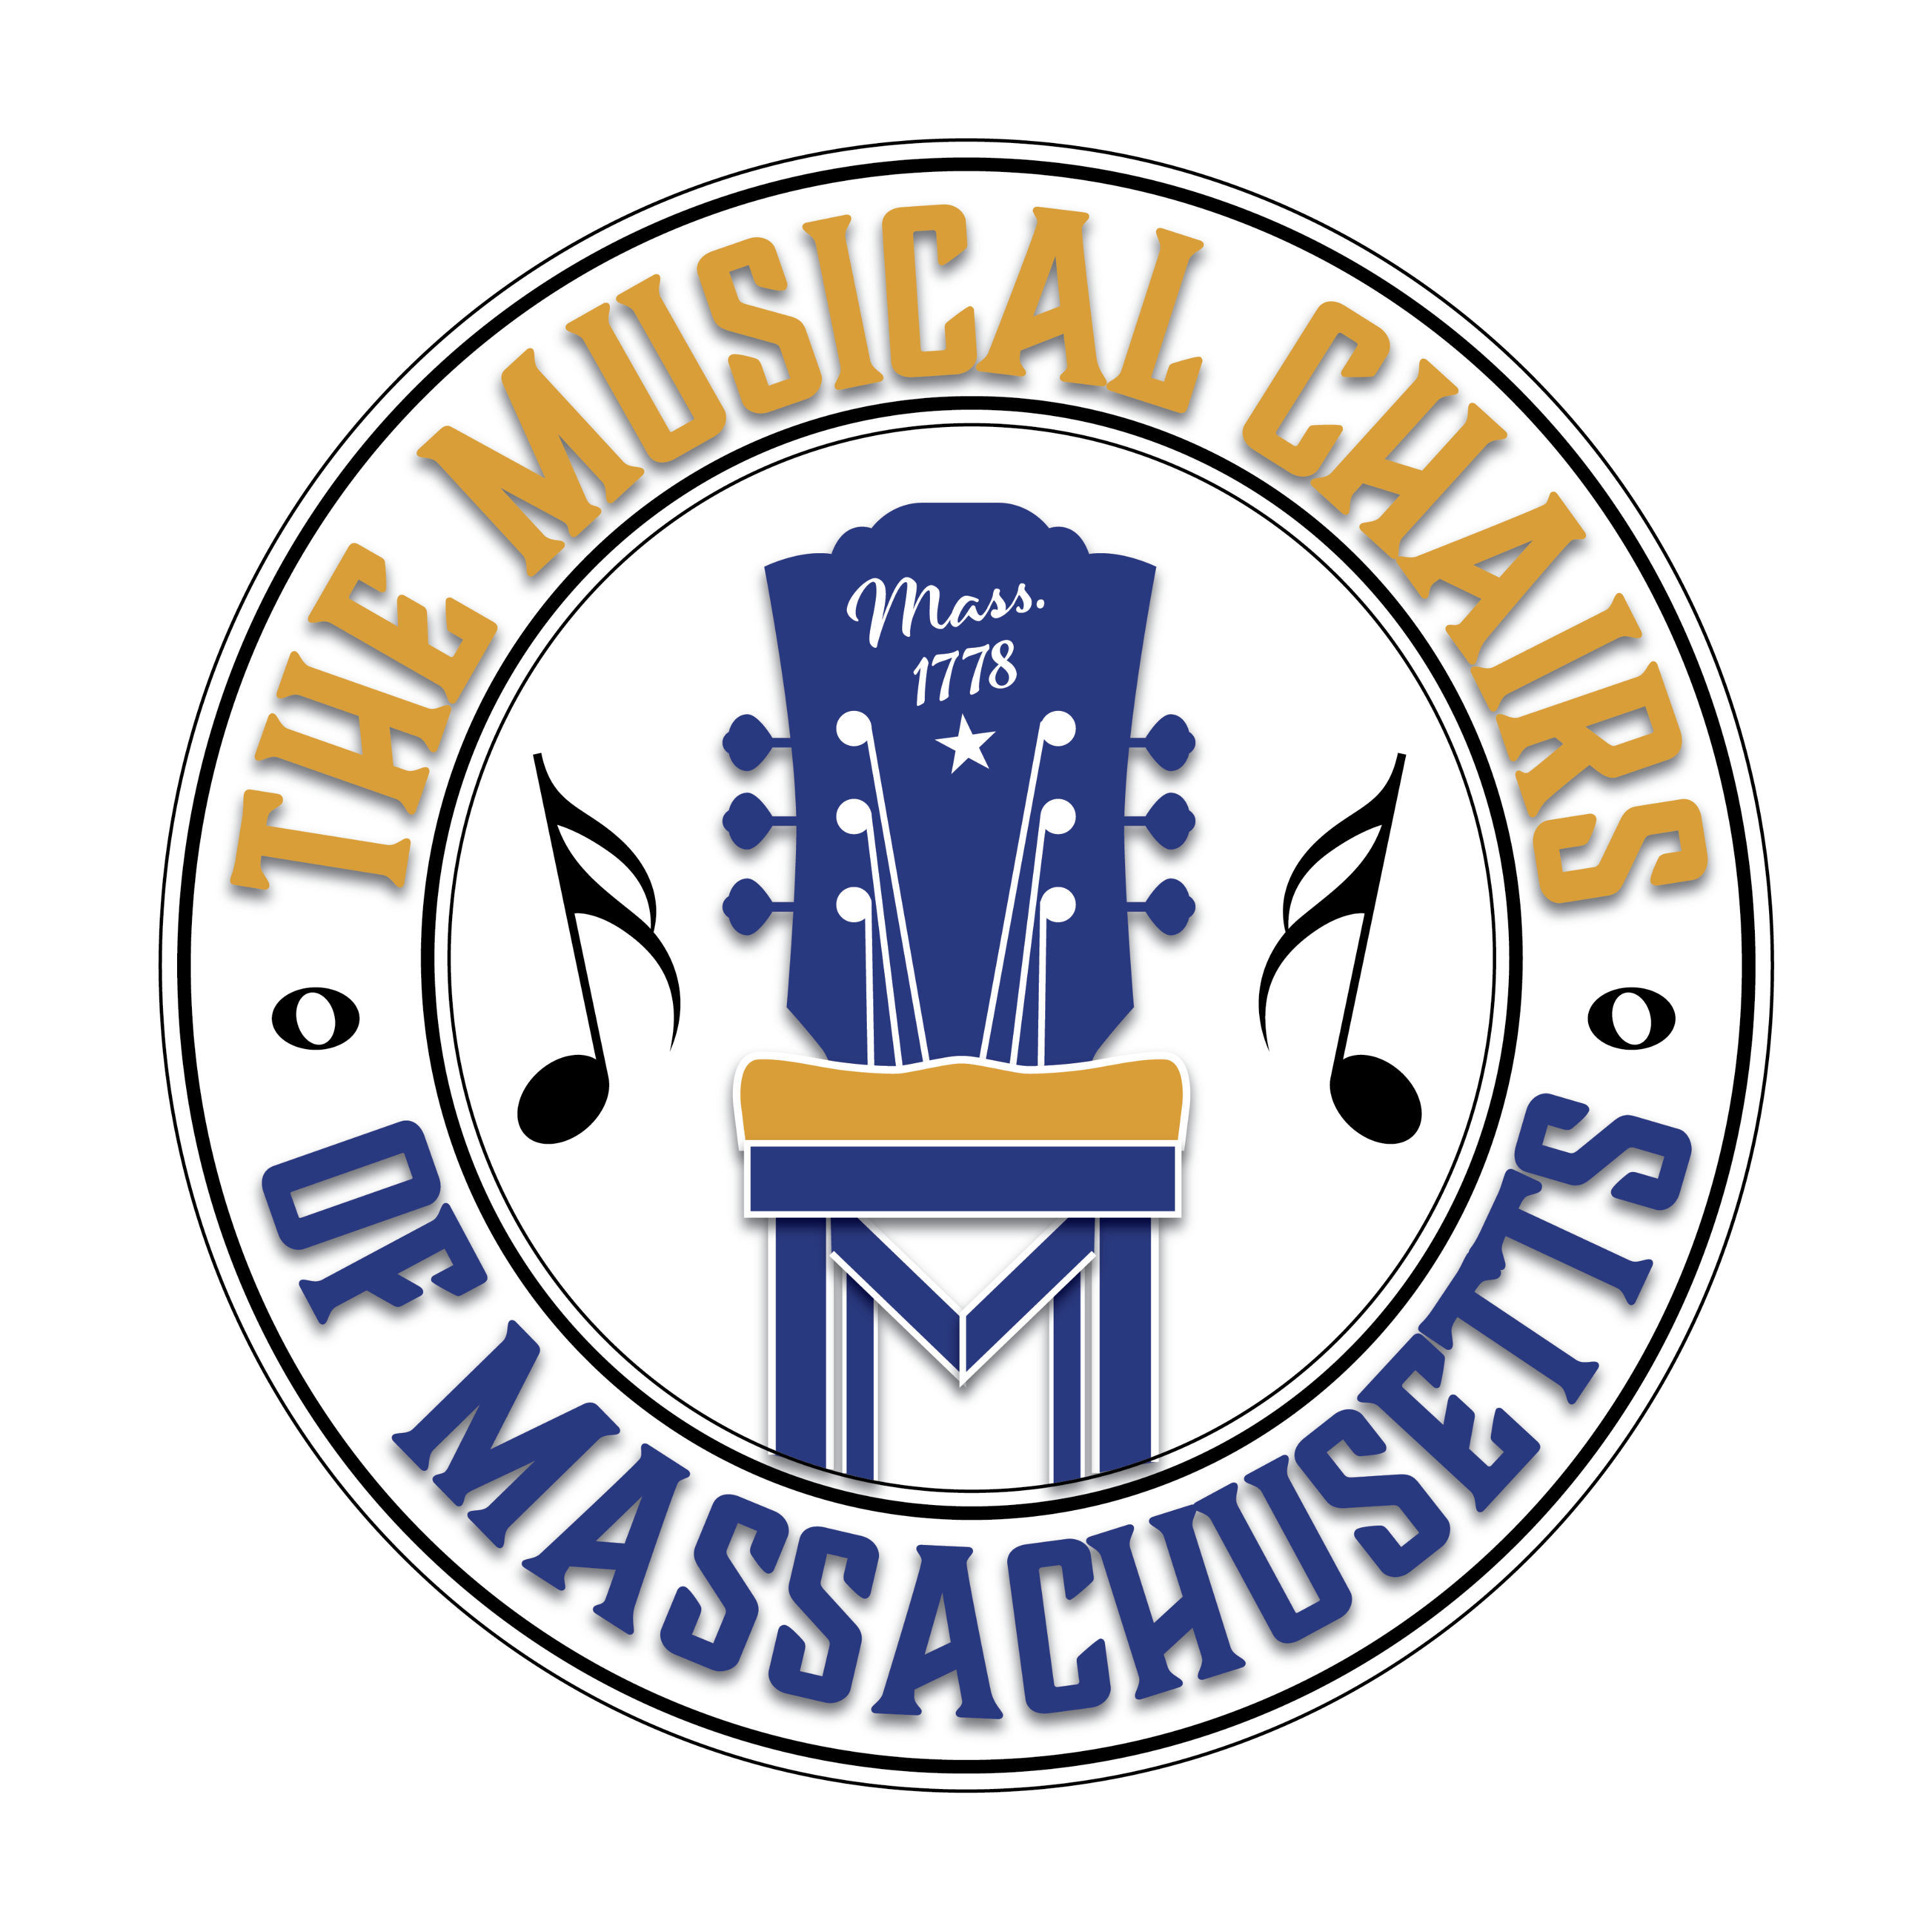 The Musical Chairs of Massachusetts